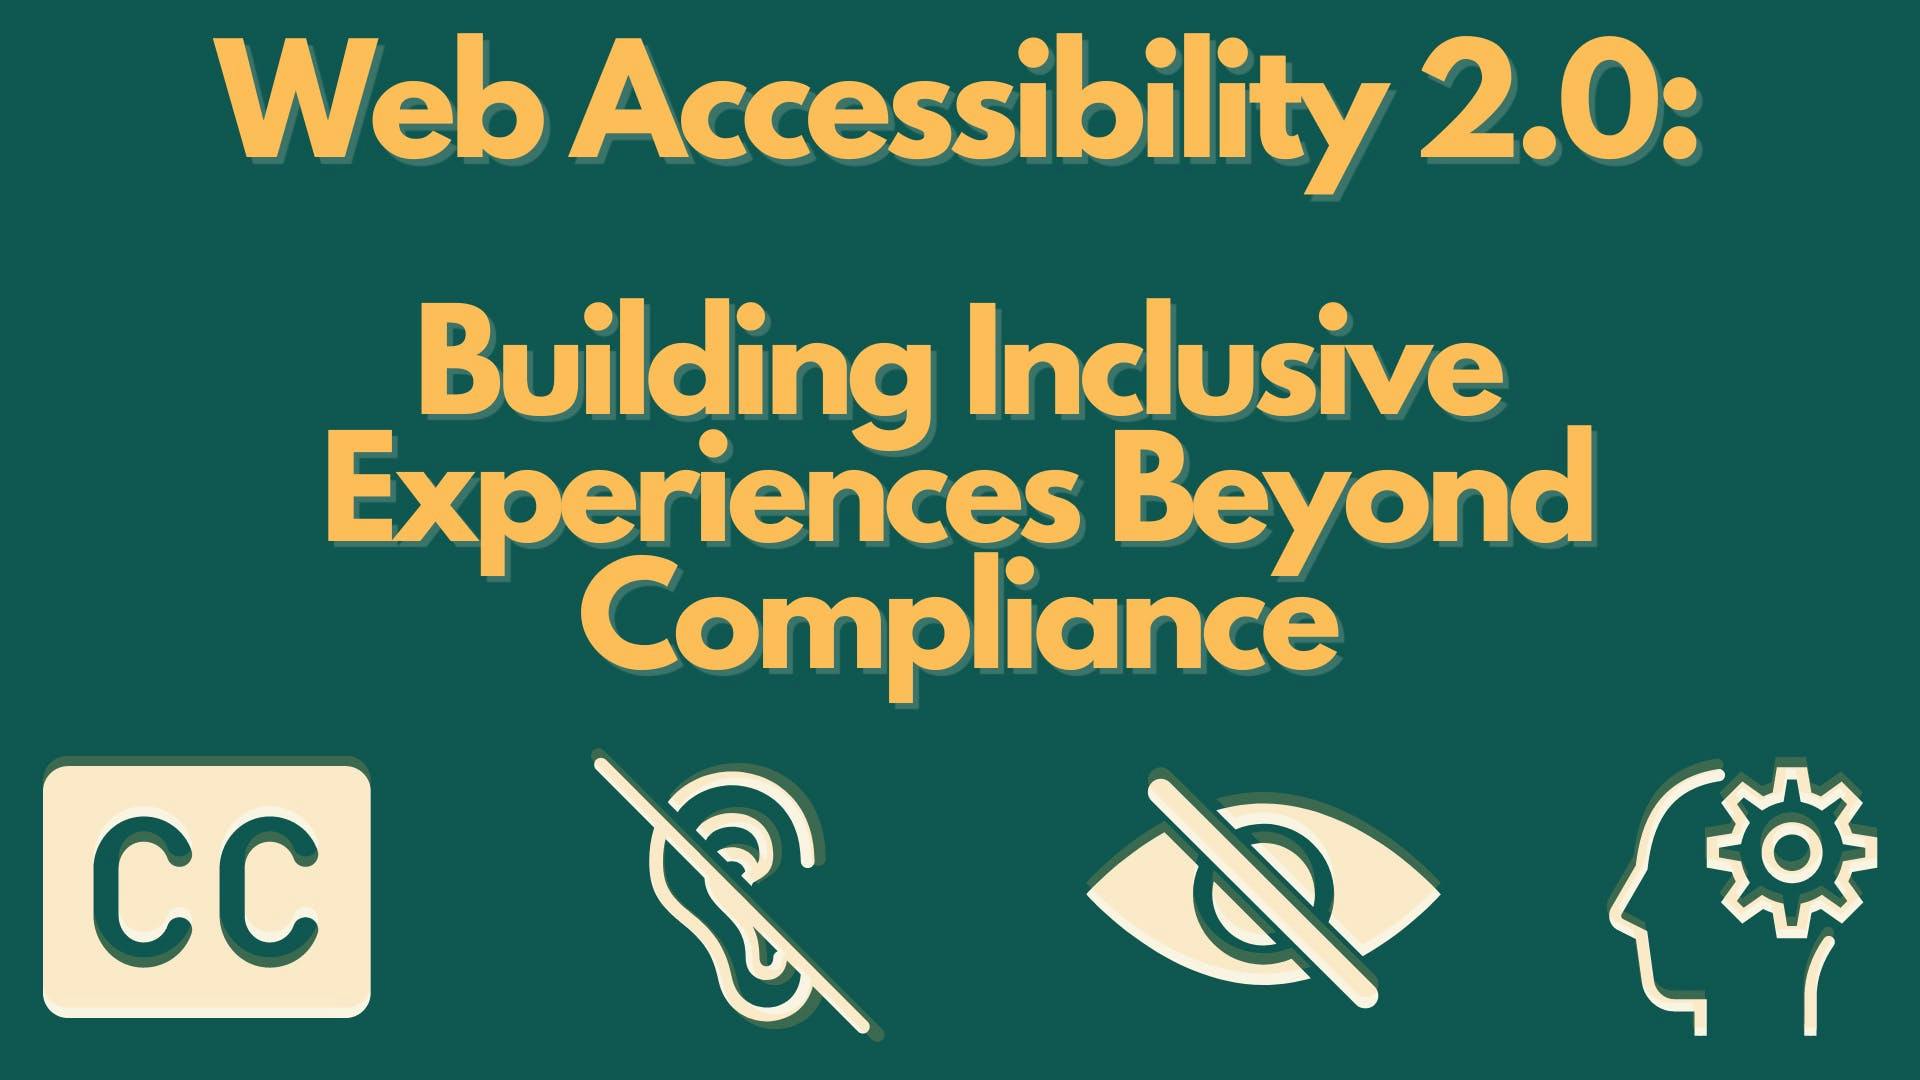 Web Accessibility 2.0: Building Inclusive Experiences Beyond Compliance